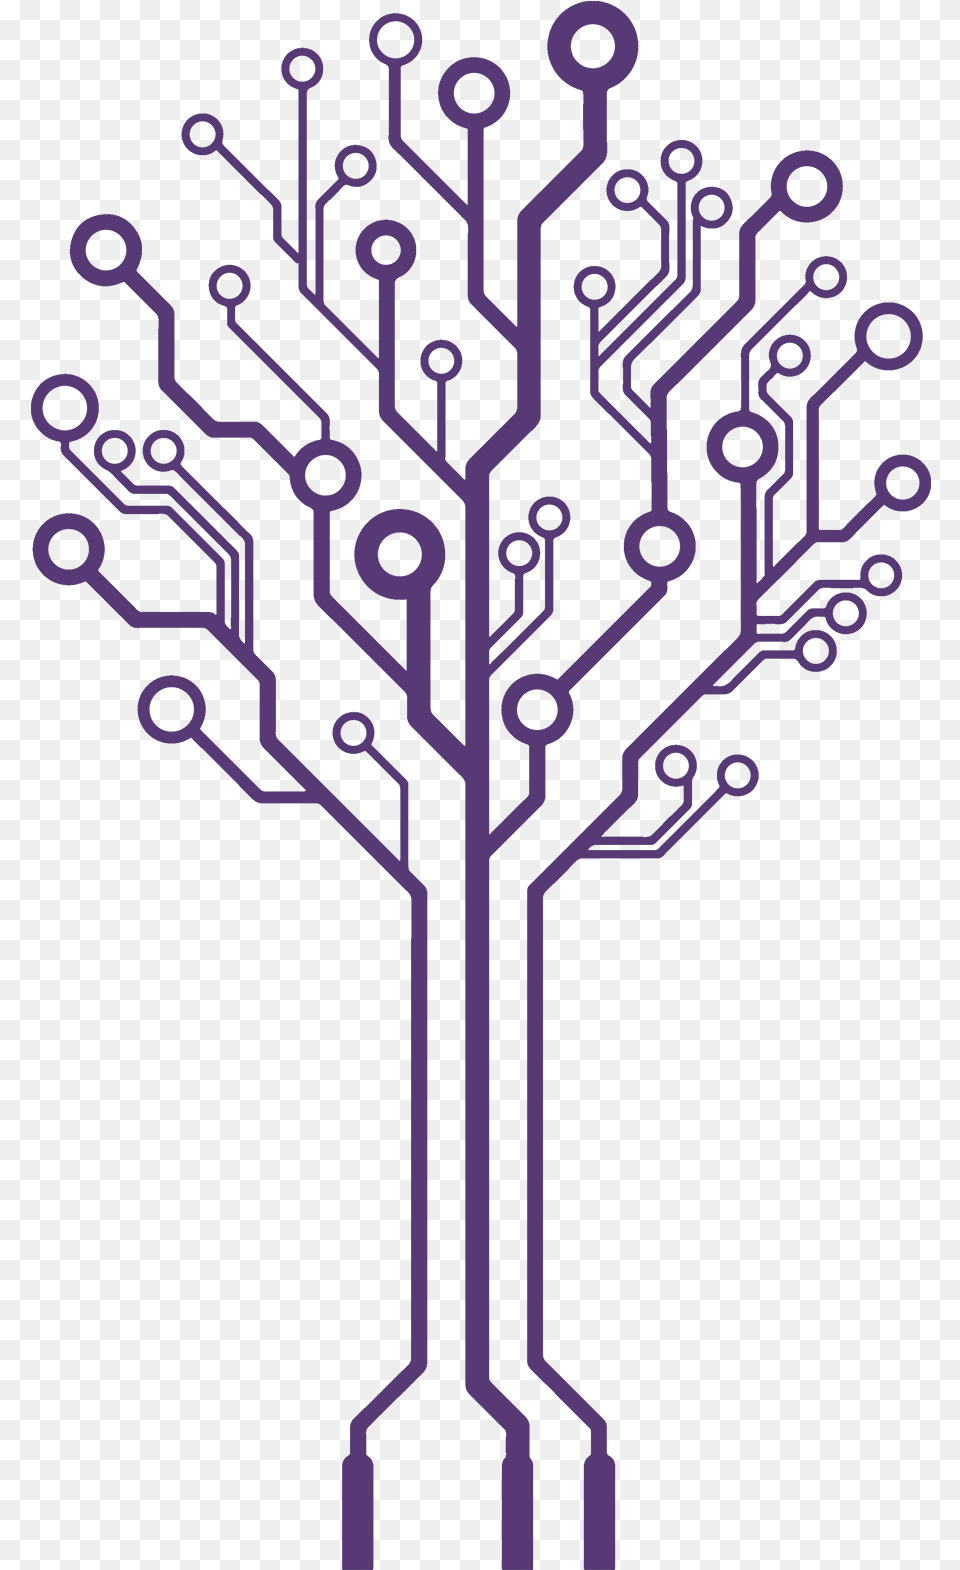 Download Circuit Tree Simple Circuit Board Vector Circuit Board Vector, Cross, Symbol, Electronics, Hardware Png Image